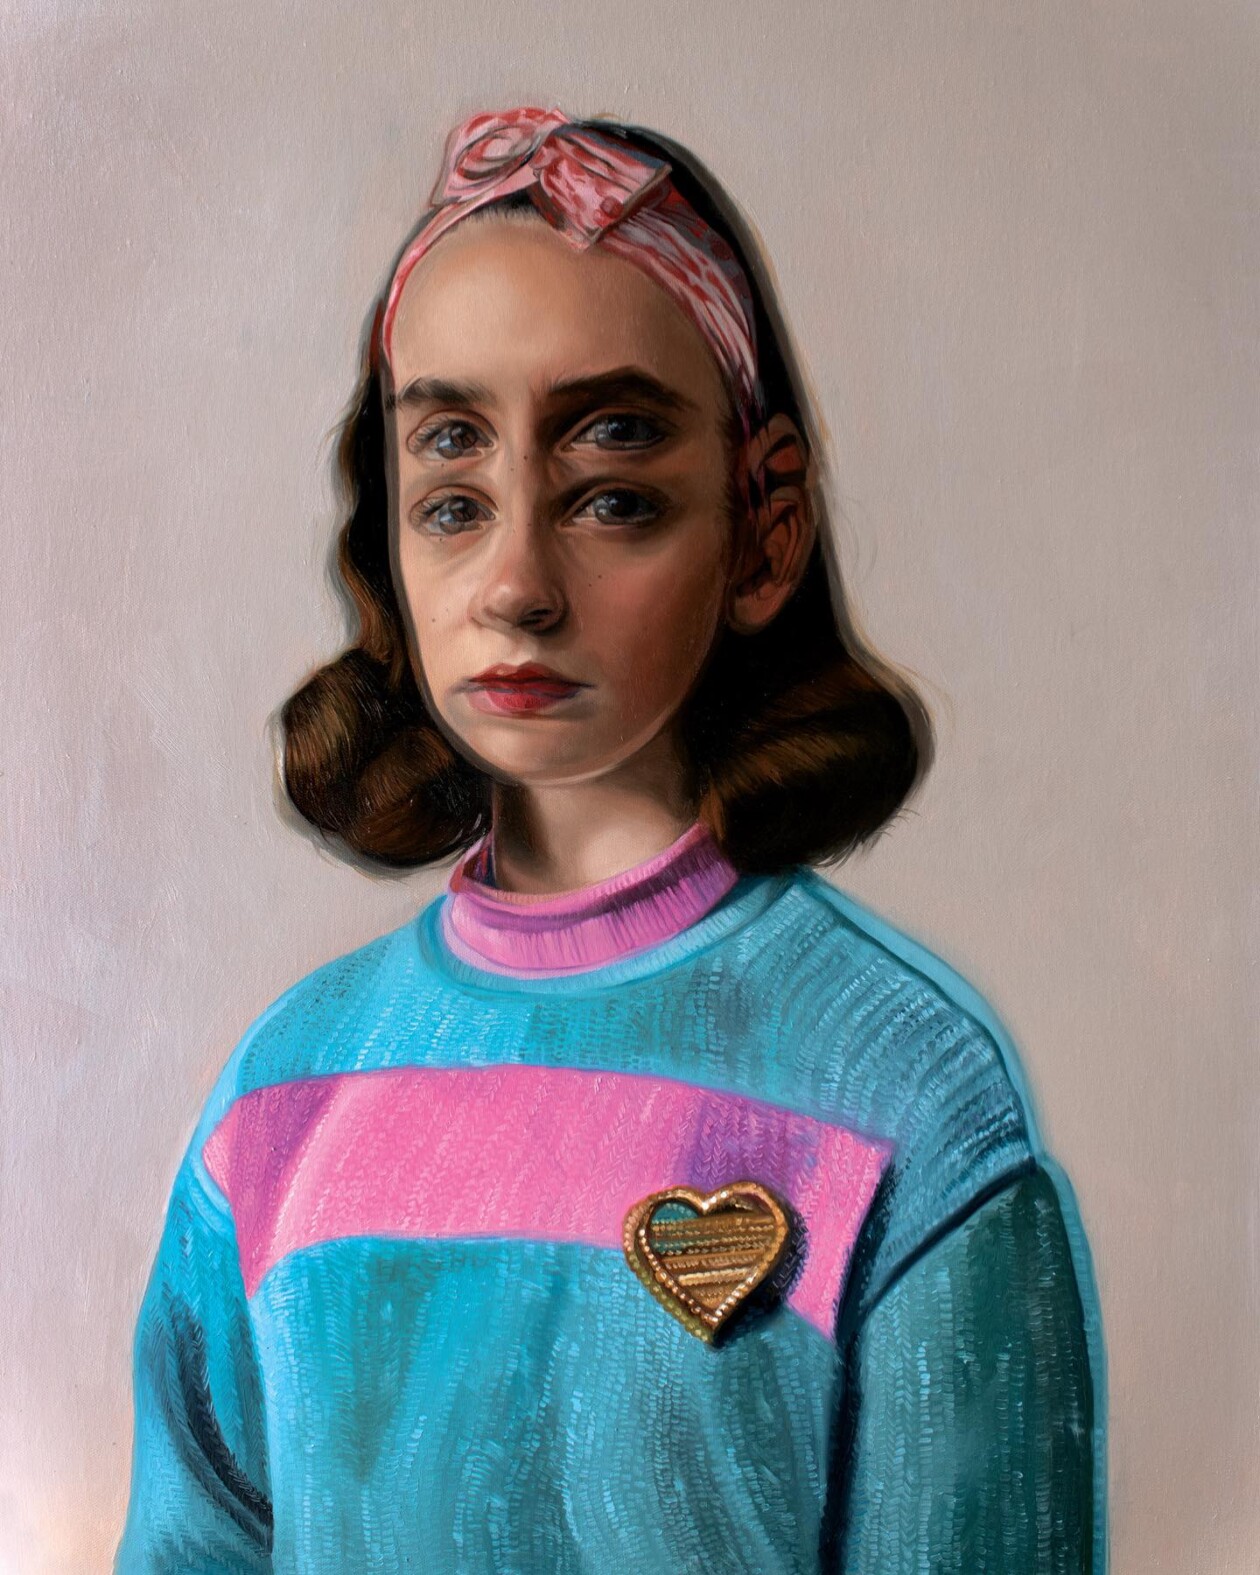 Alex Garant Overlaps Repeated Female Figures To Create Unique And Hypnotizing Portrait Paintings (7)